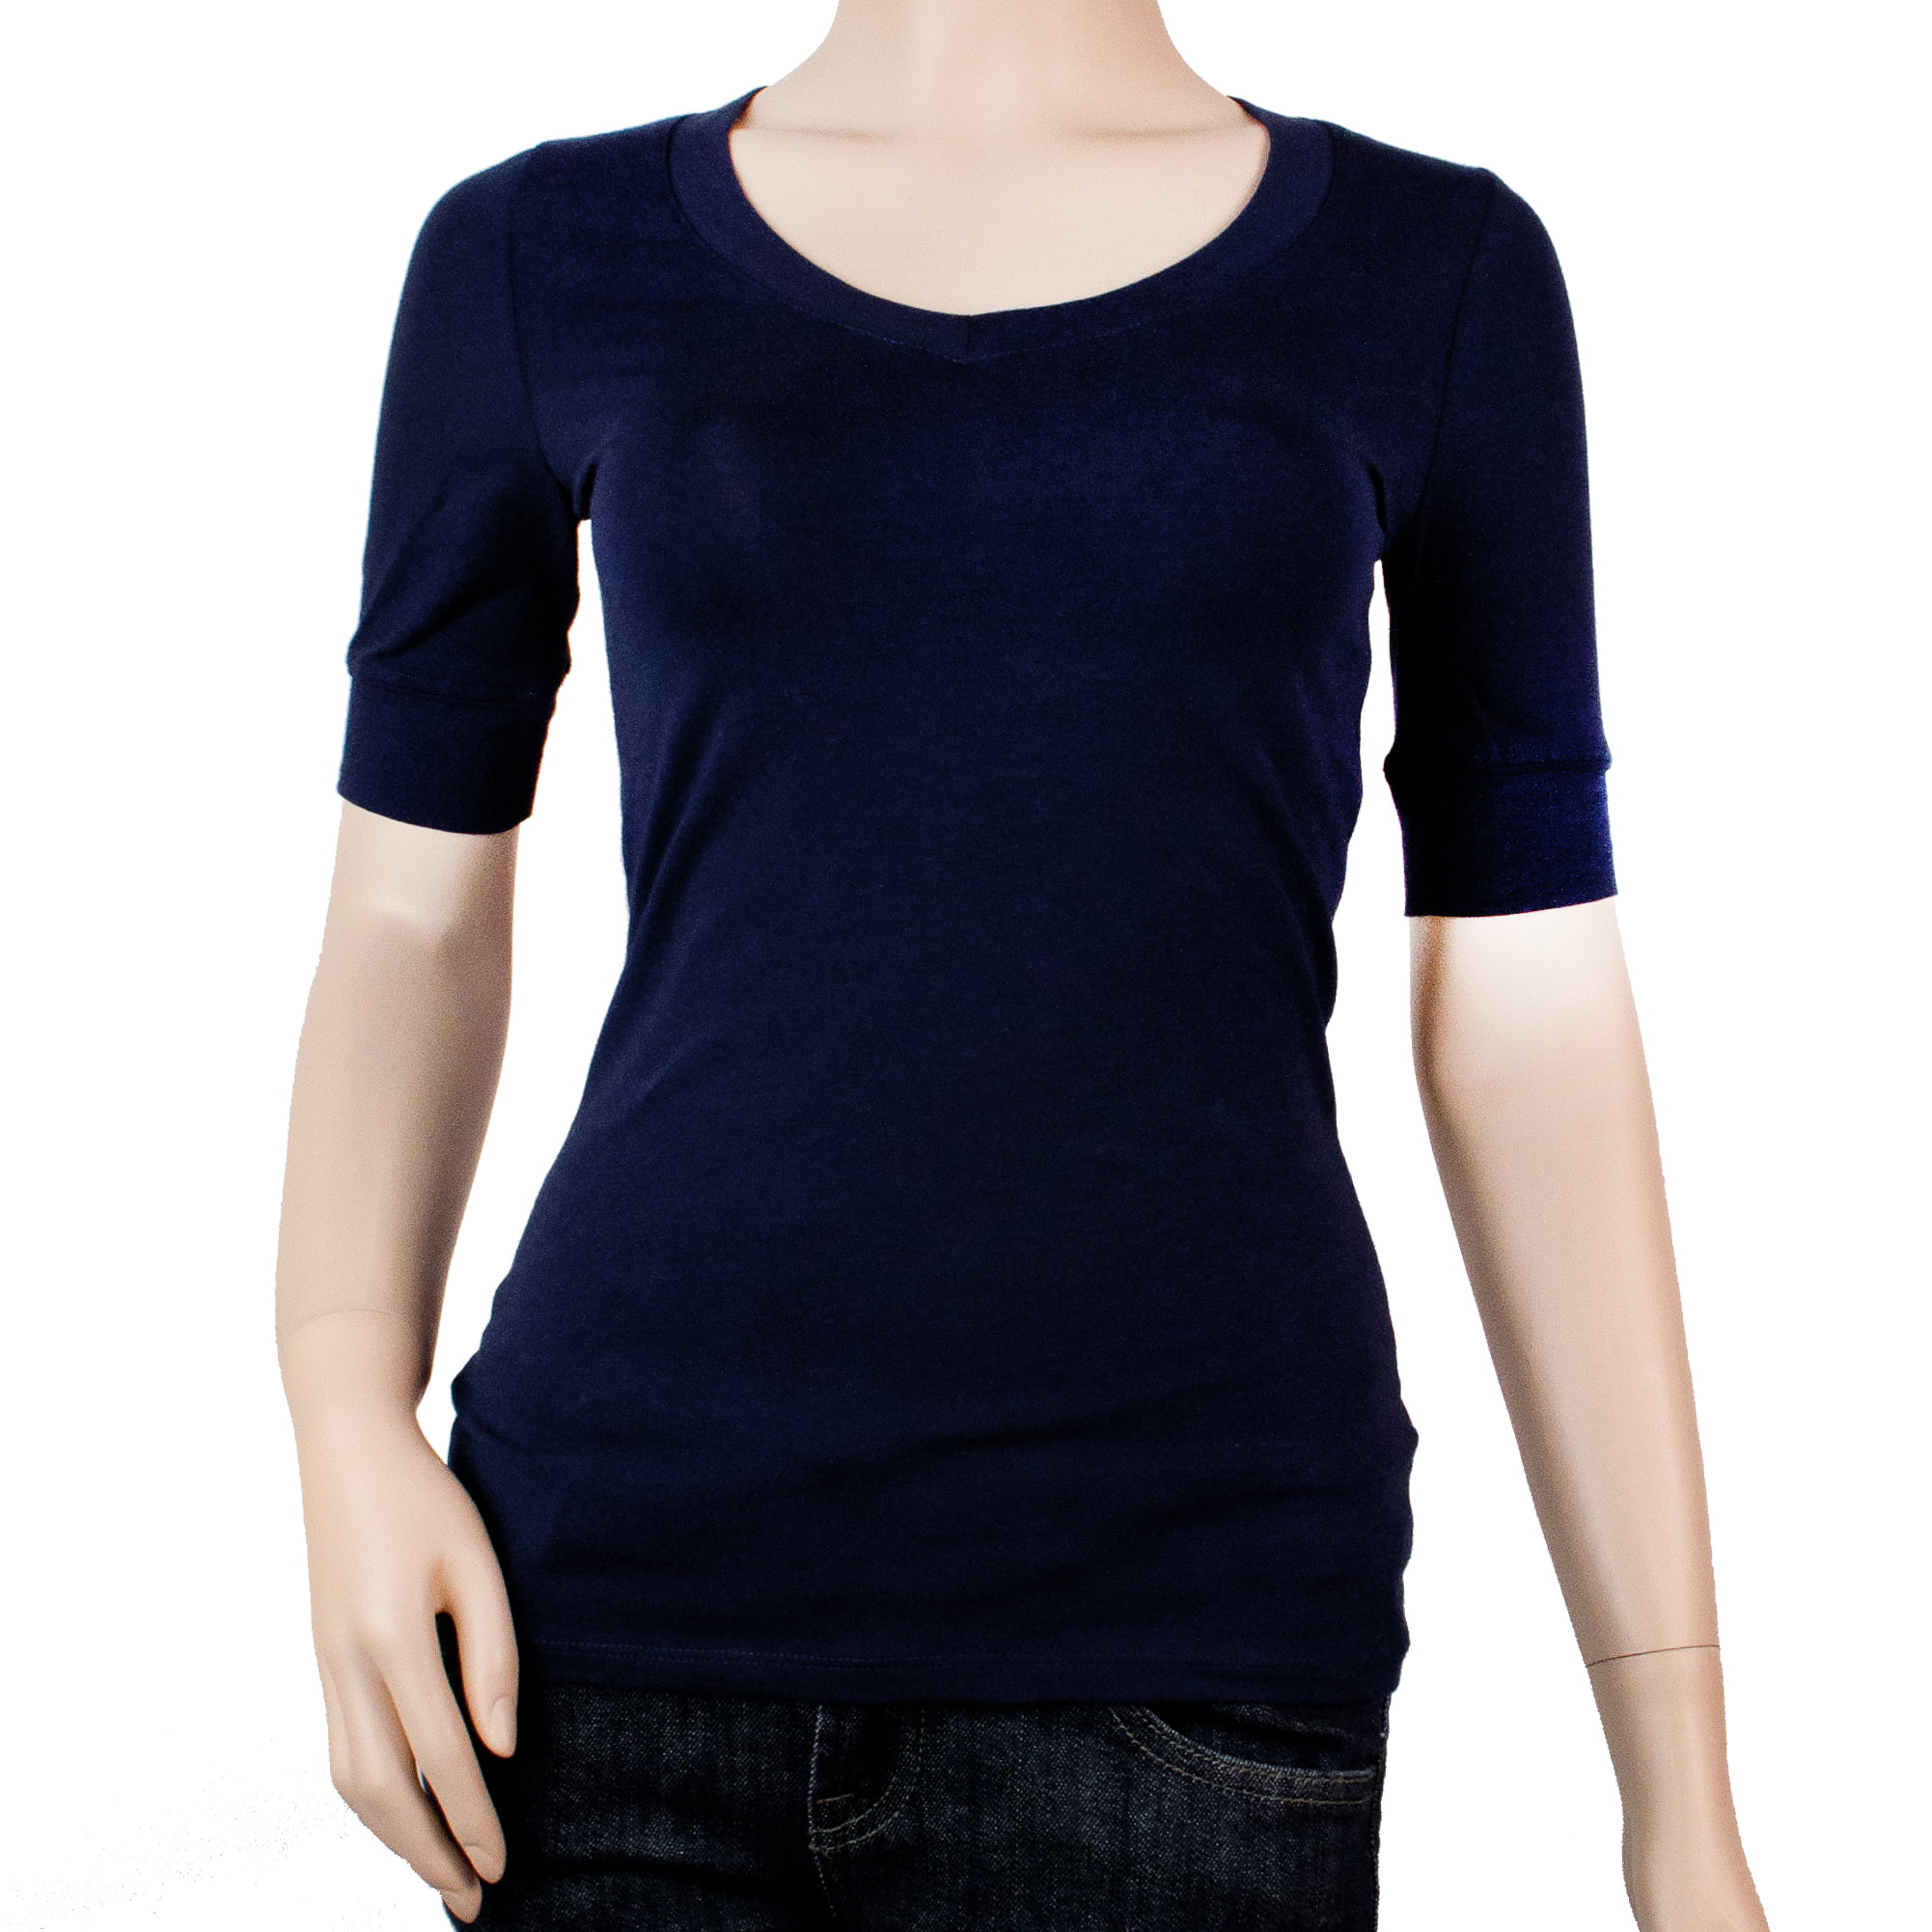 SNJ - Women's Basic Elbow Sleeve V-Neck Cotton T-Shirt Plain Top-Plus ...